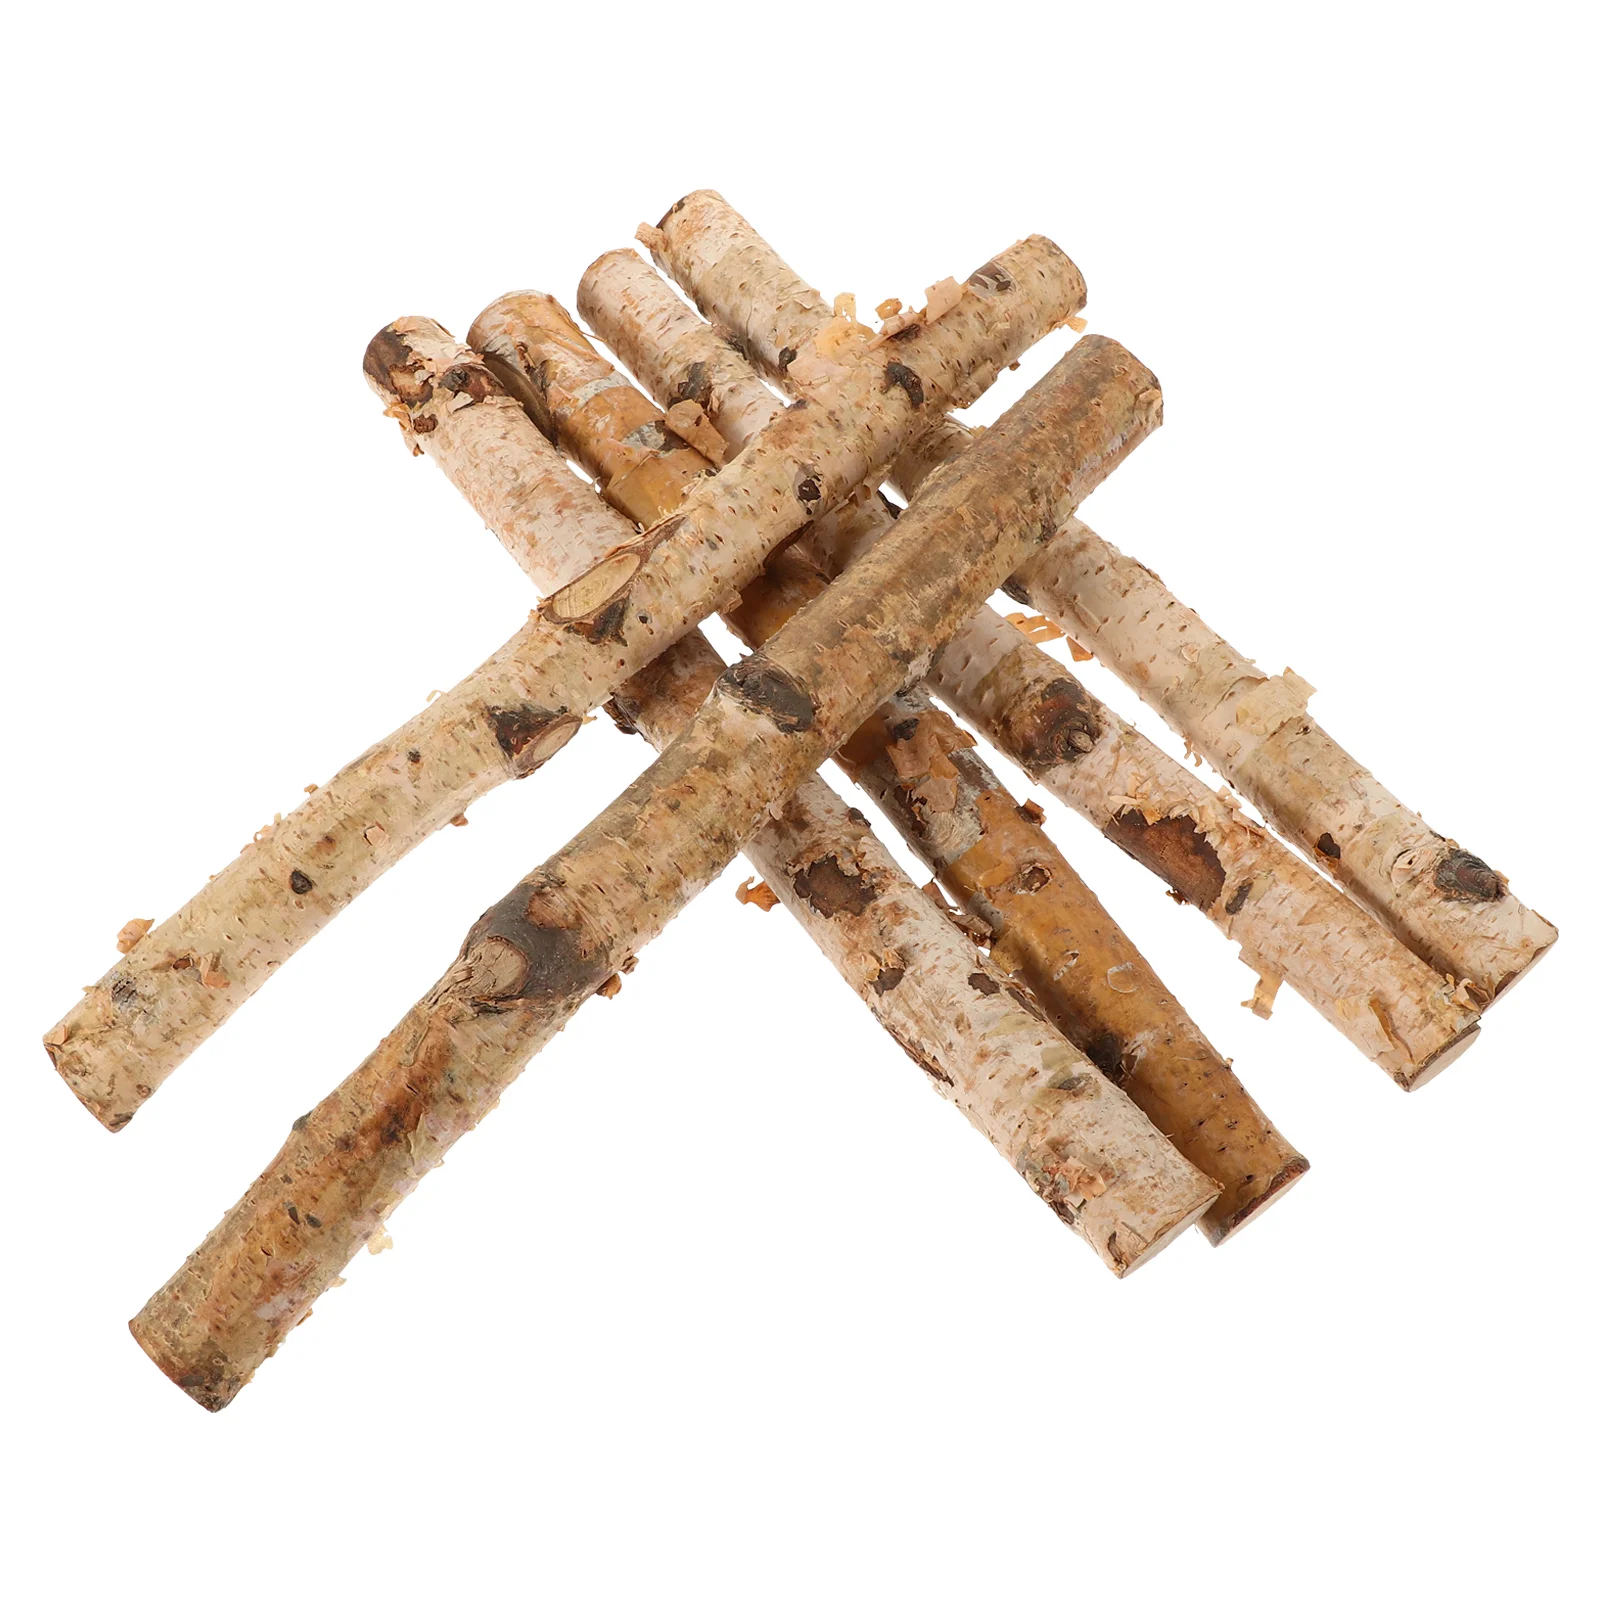 

6pcs Diy Dried Wood Log Handicraft Tree Branch Diy Wood Sticks for Flower Arrangement and Diy Crafts Use